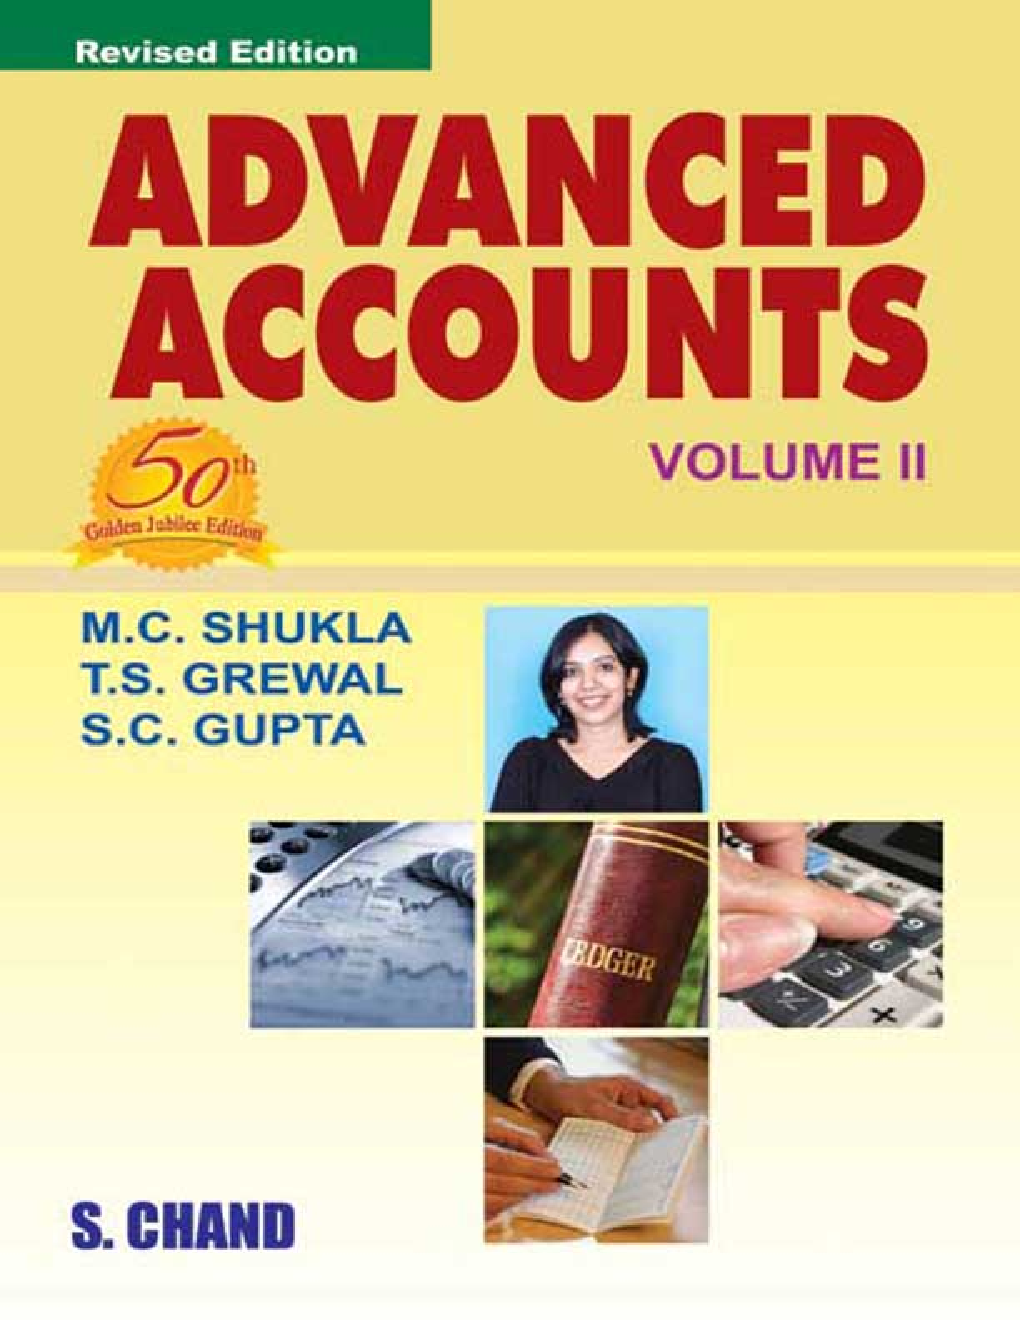 11th accounts book t.s grewal pdf